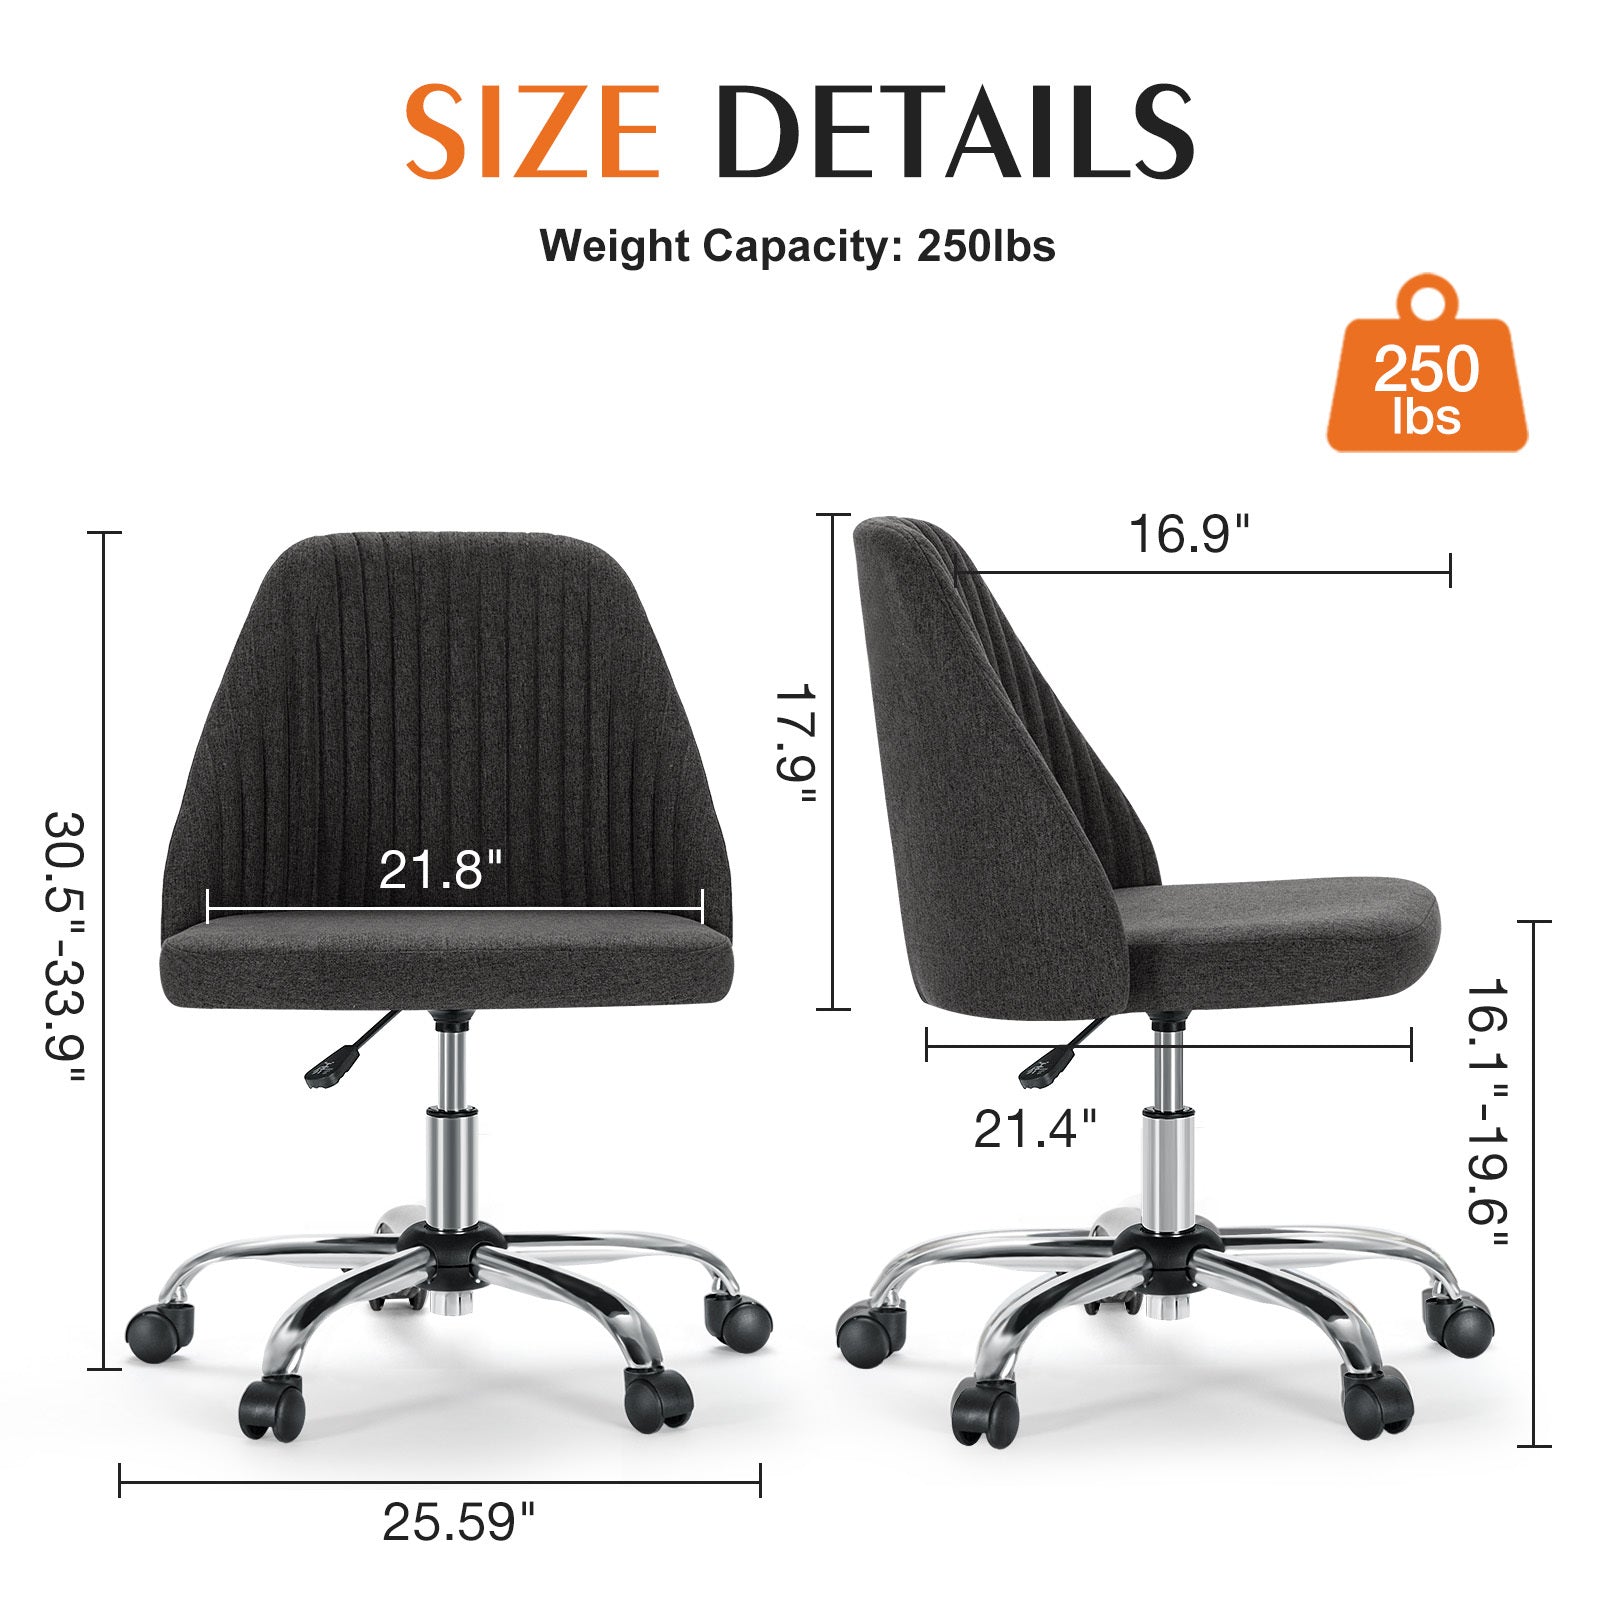 Sweetcrispy Armless Home Office Desk Chair with Wheels dark gray-fabric